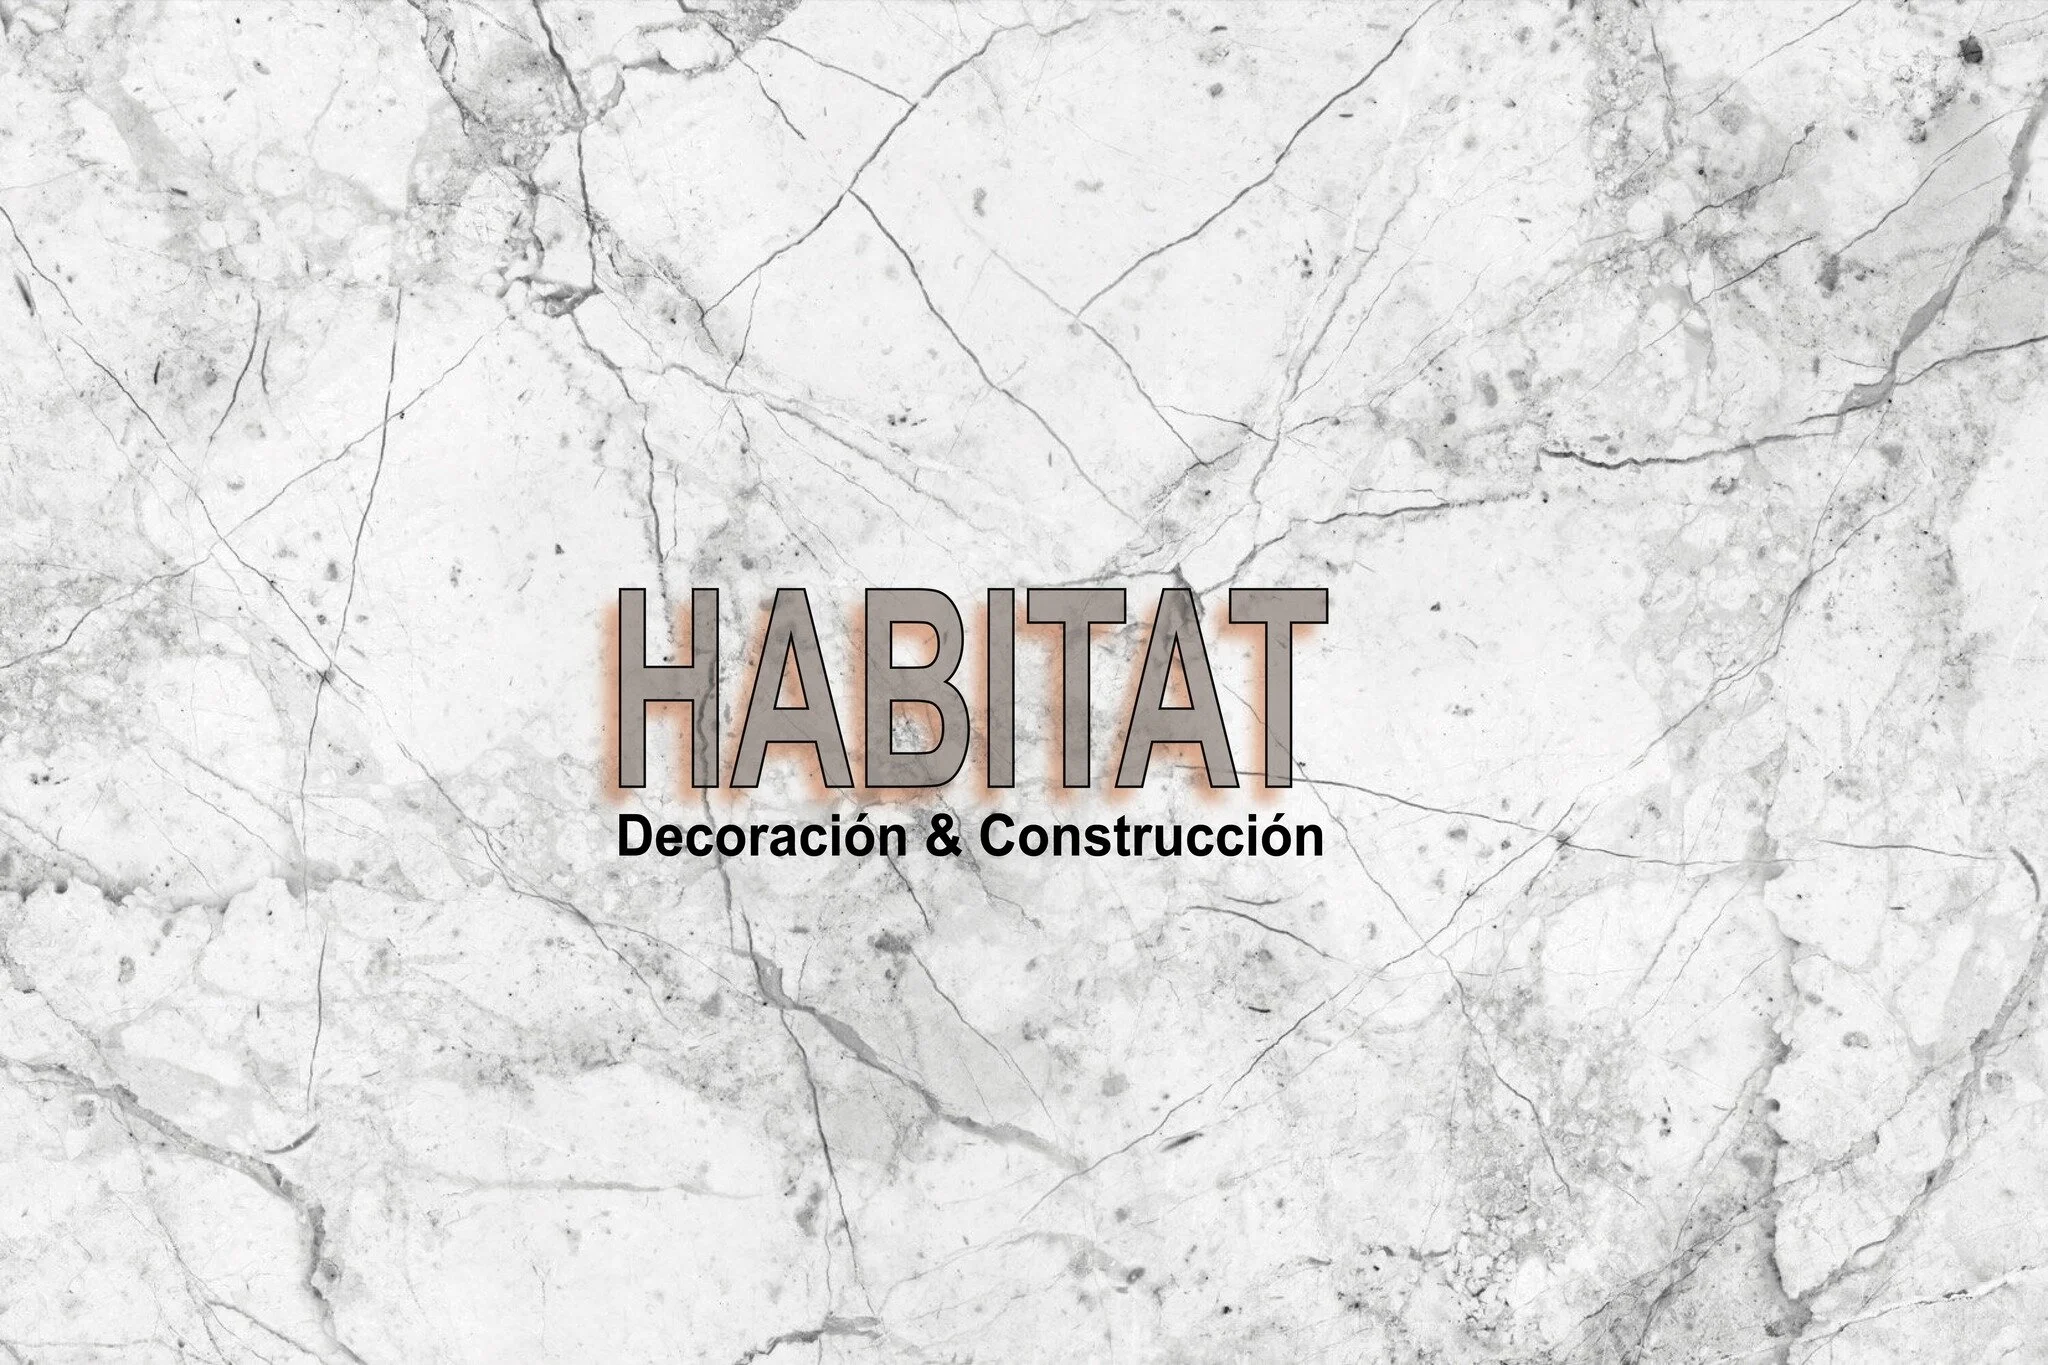 Arquitectura-habitat-decoracion-construccion-23571